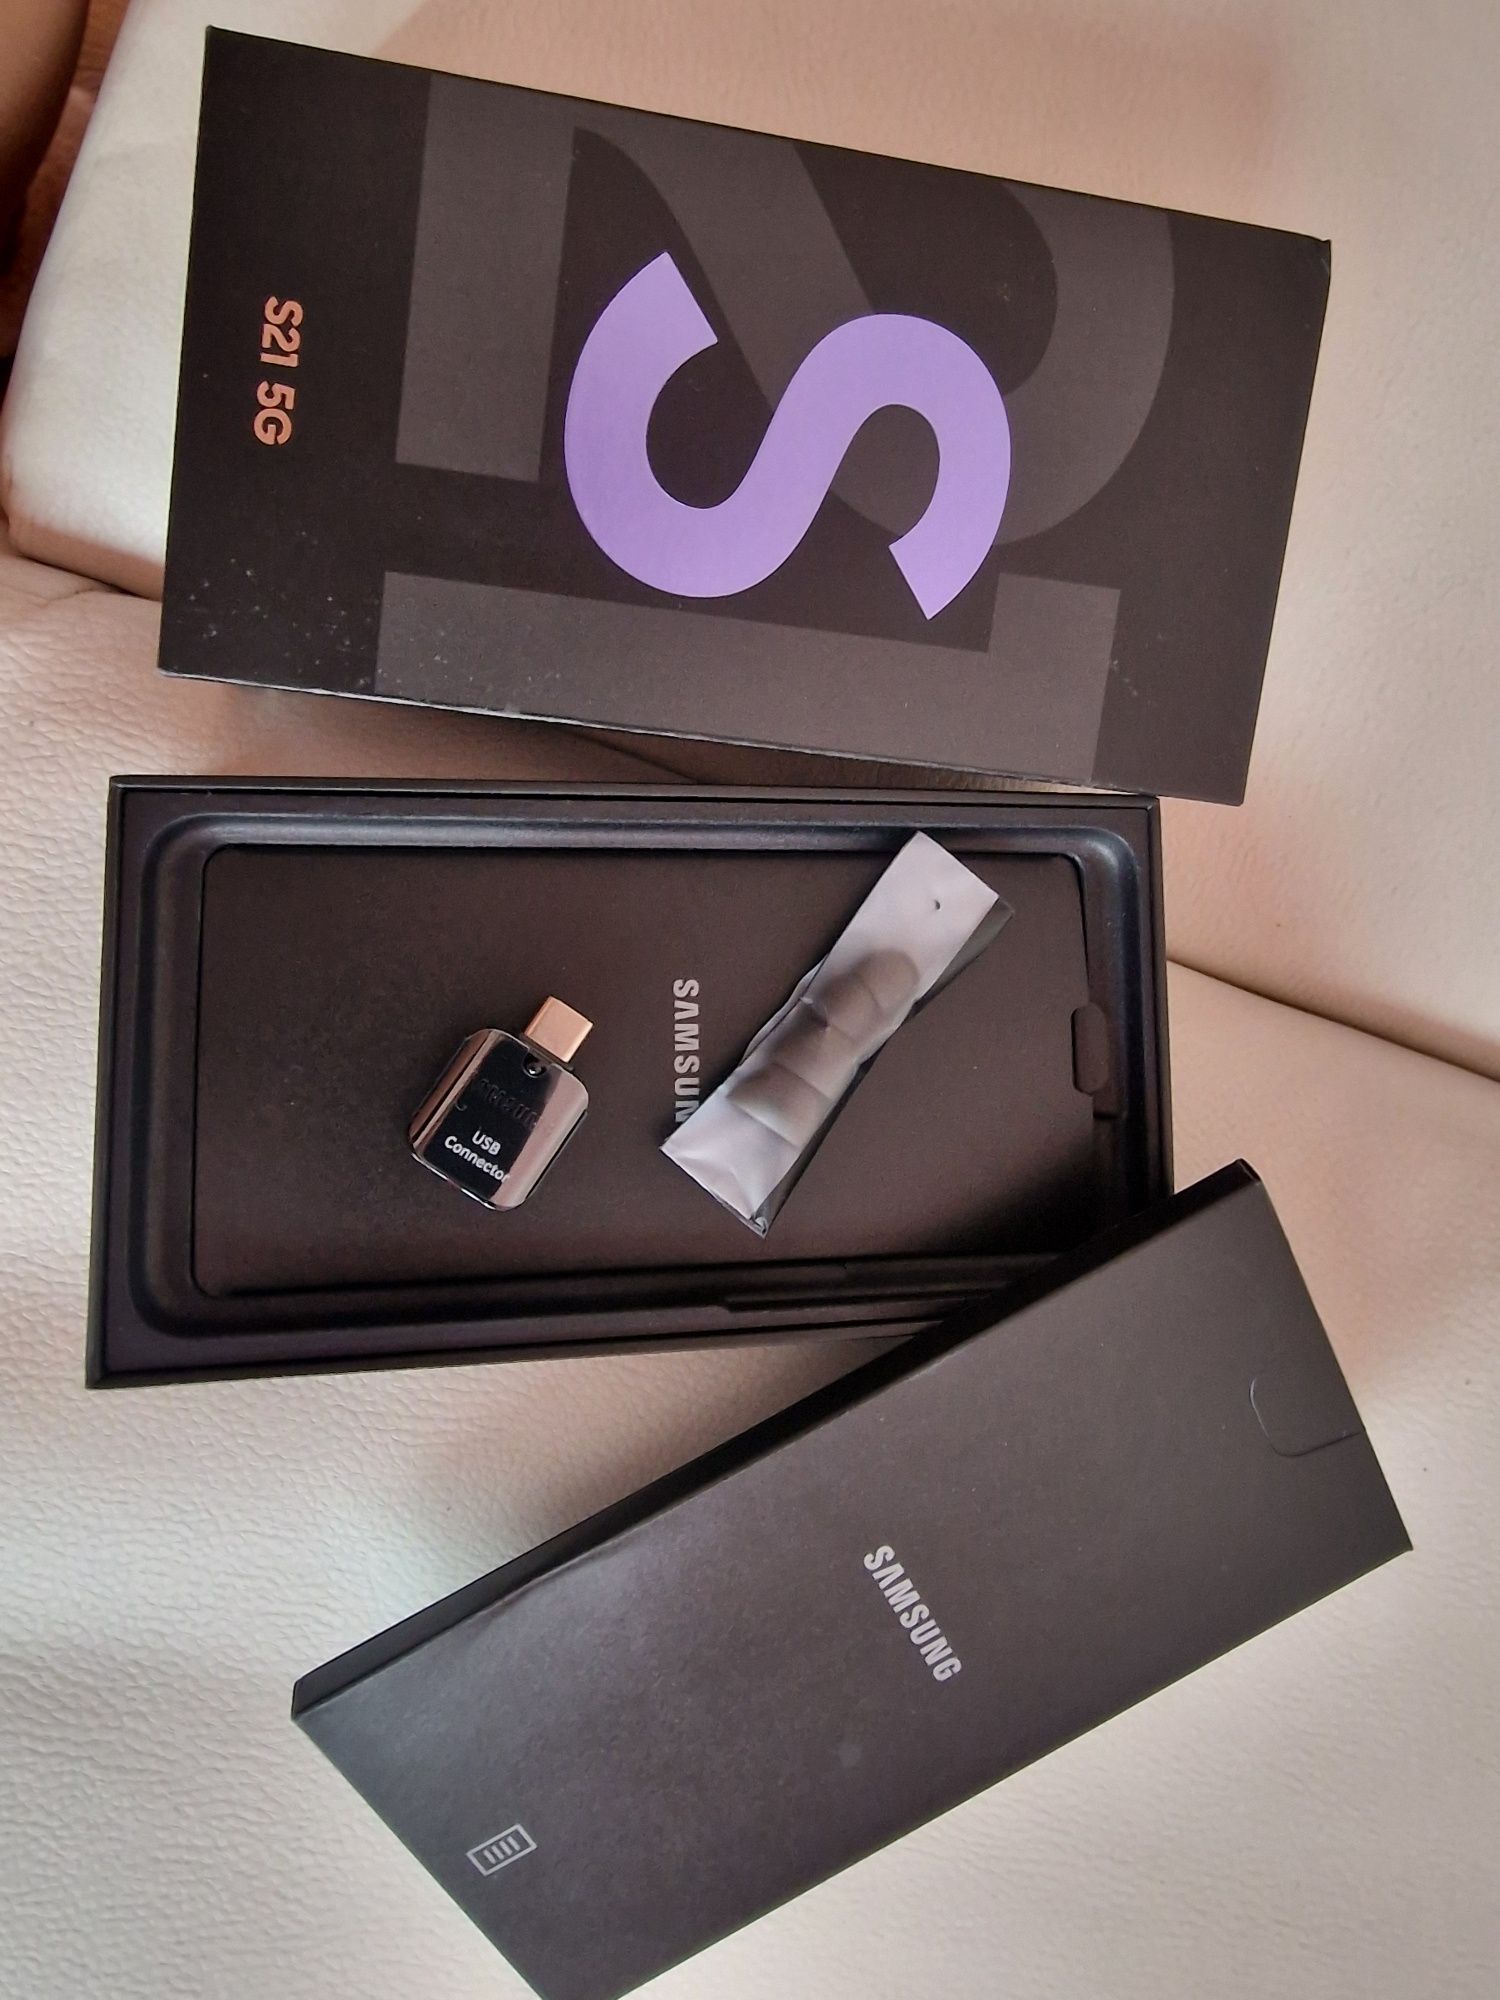 Samsung s21 Purple